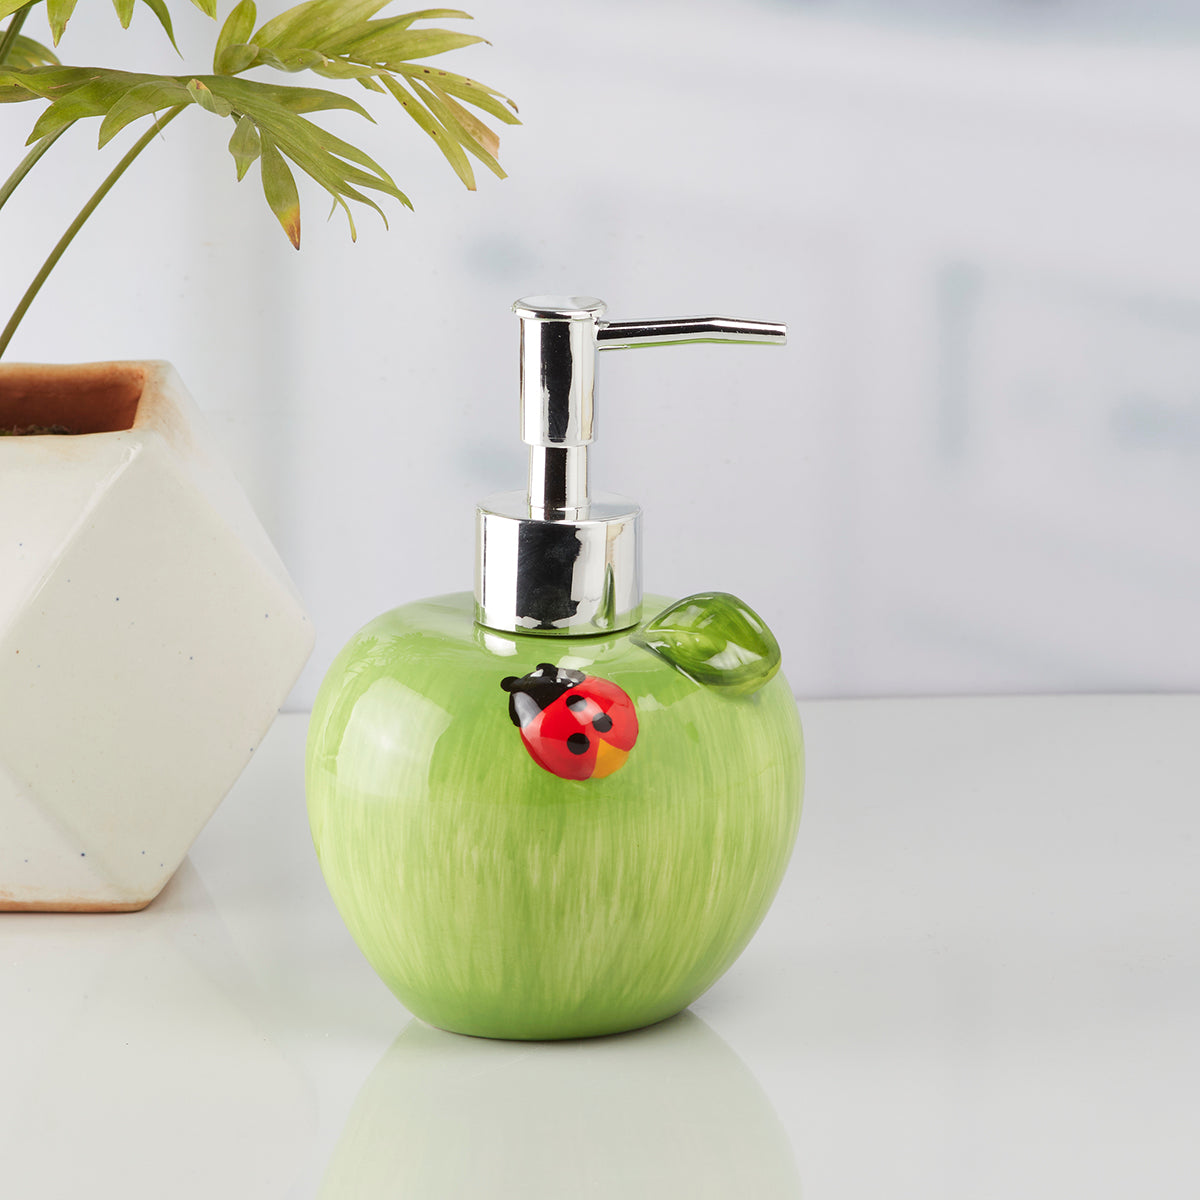 Ceramic Soap Dispenser handwash Pump for Bathroom, Set of 1, Red (10171)